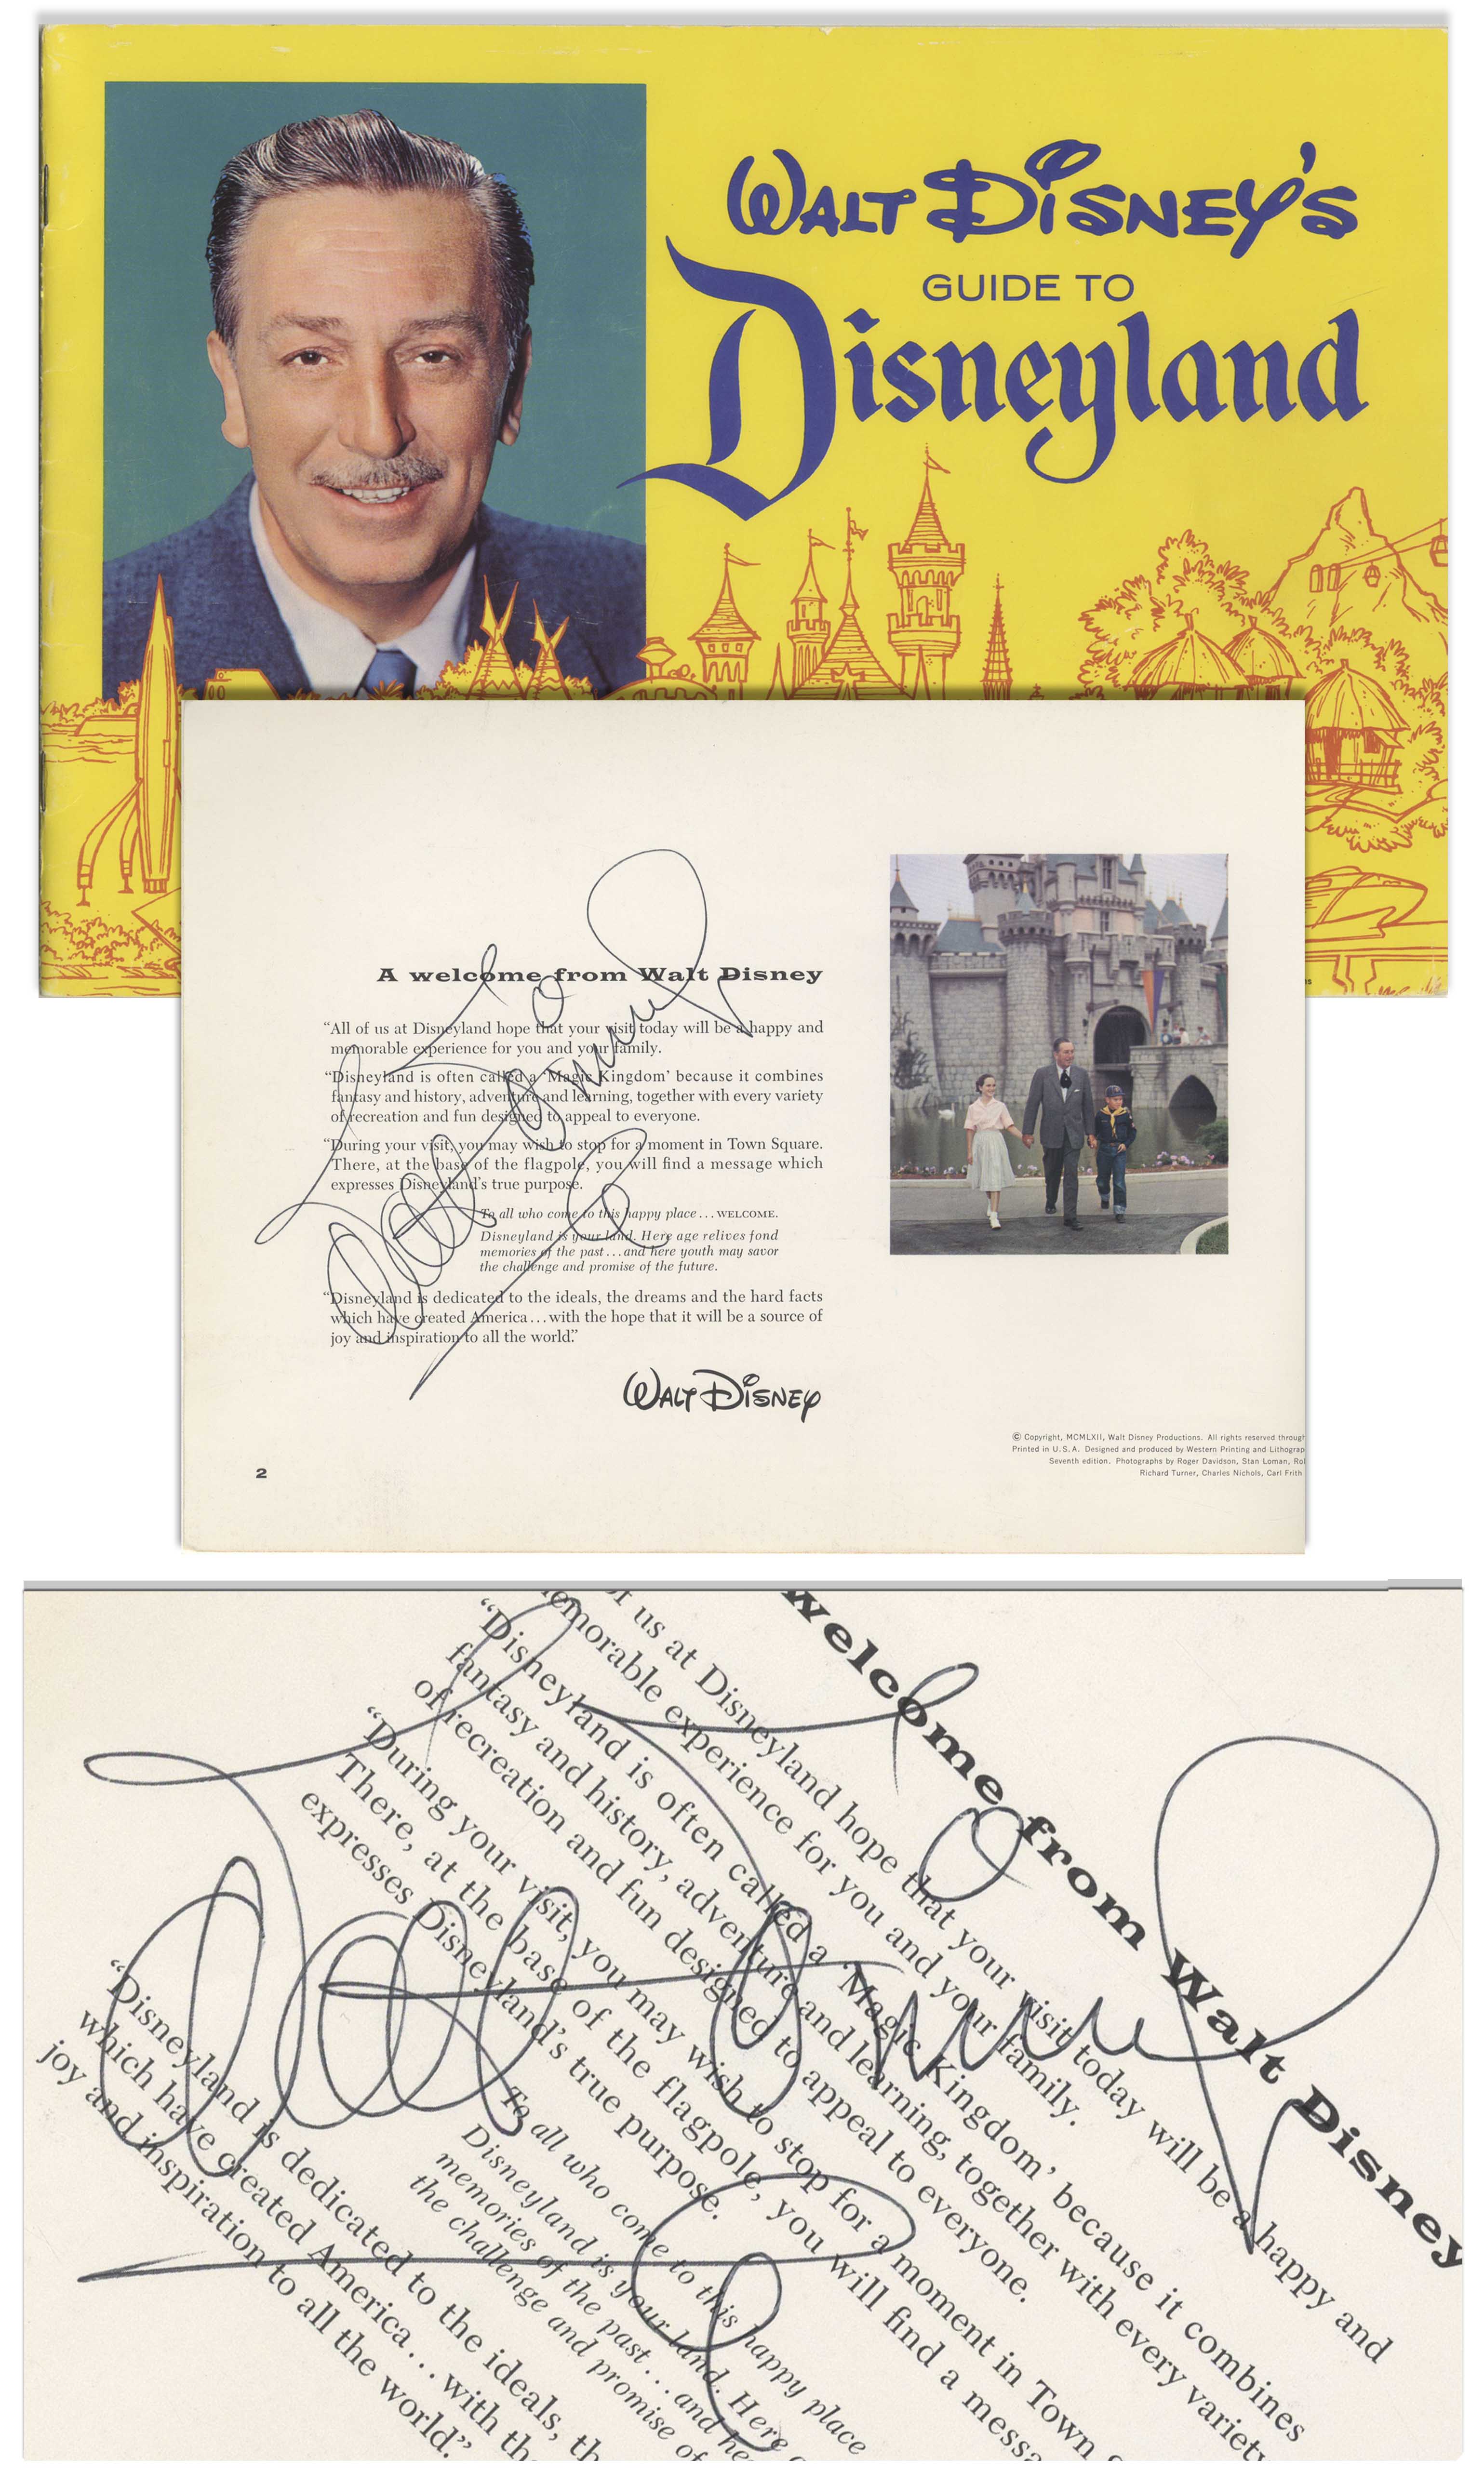 Disneyland King Arthur Carrousel sign